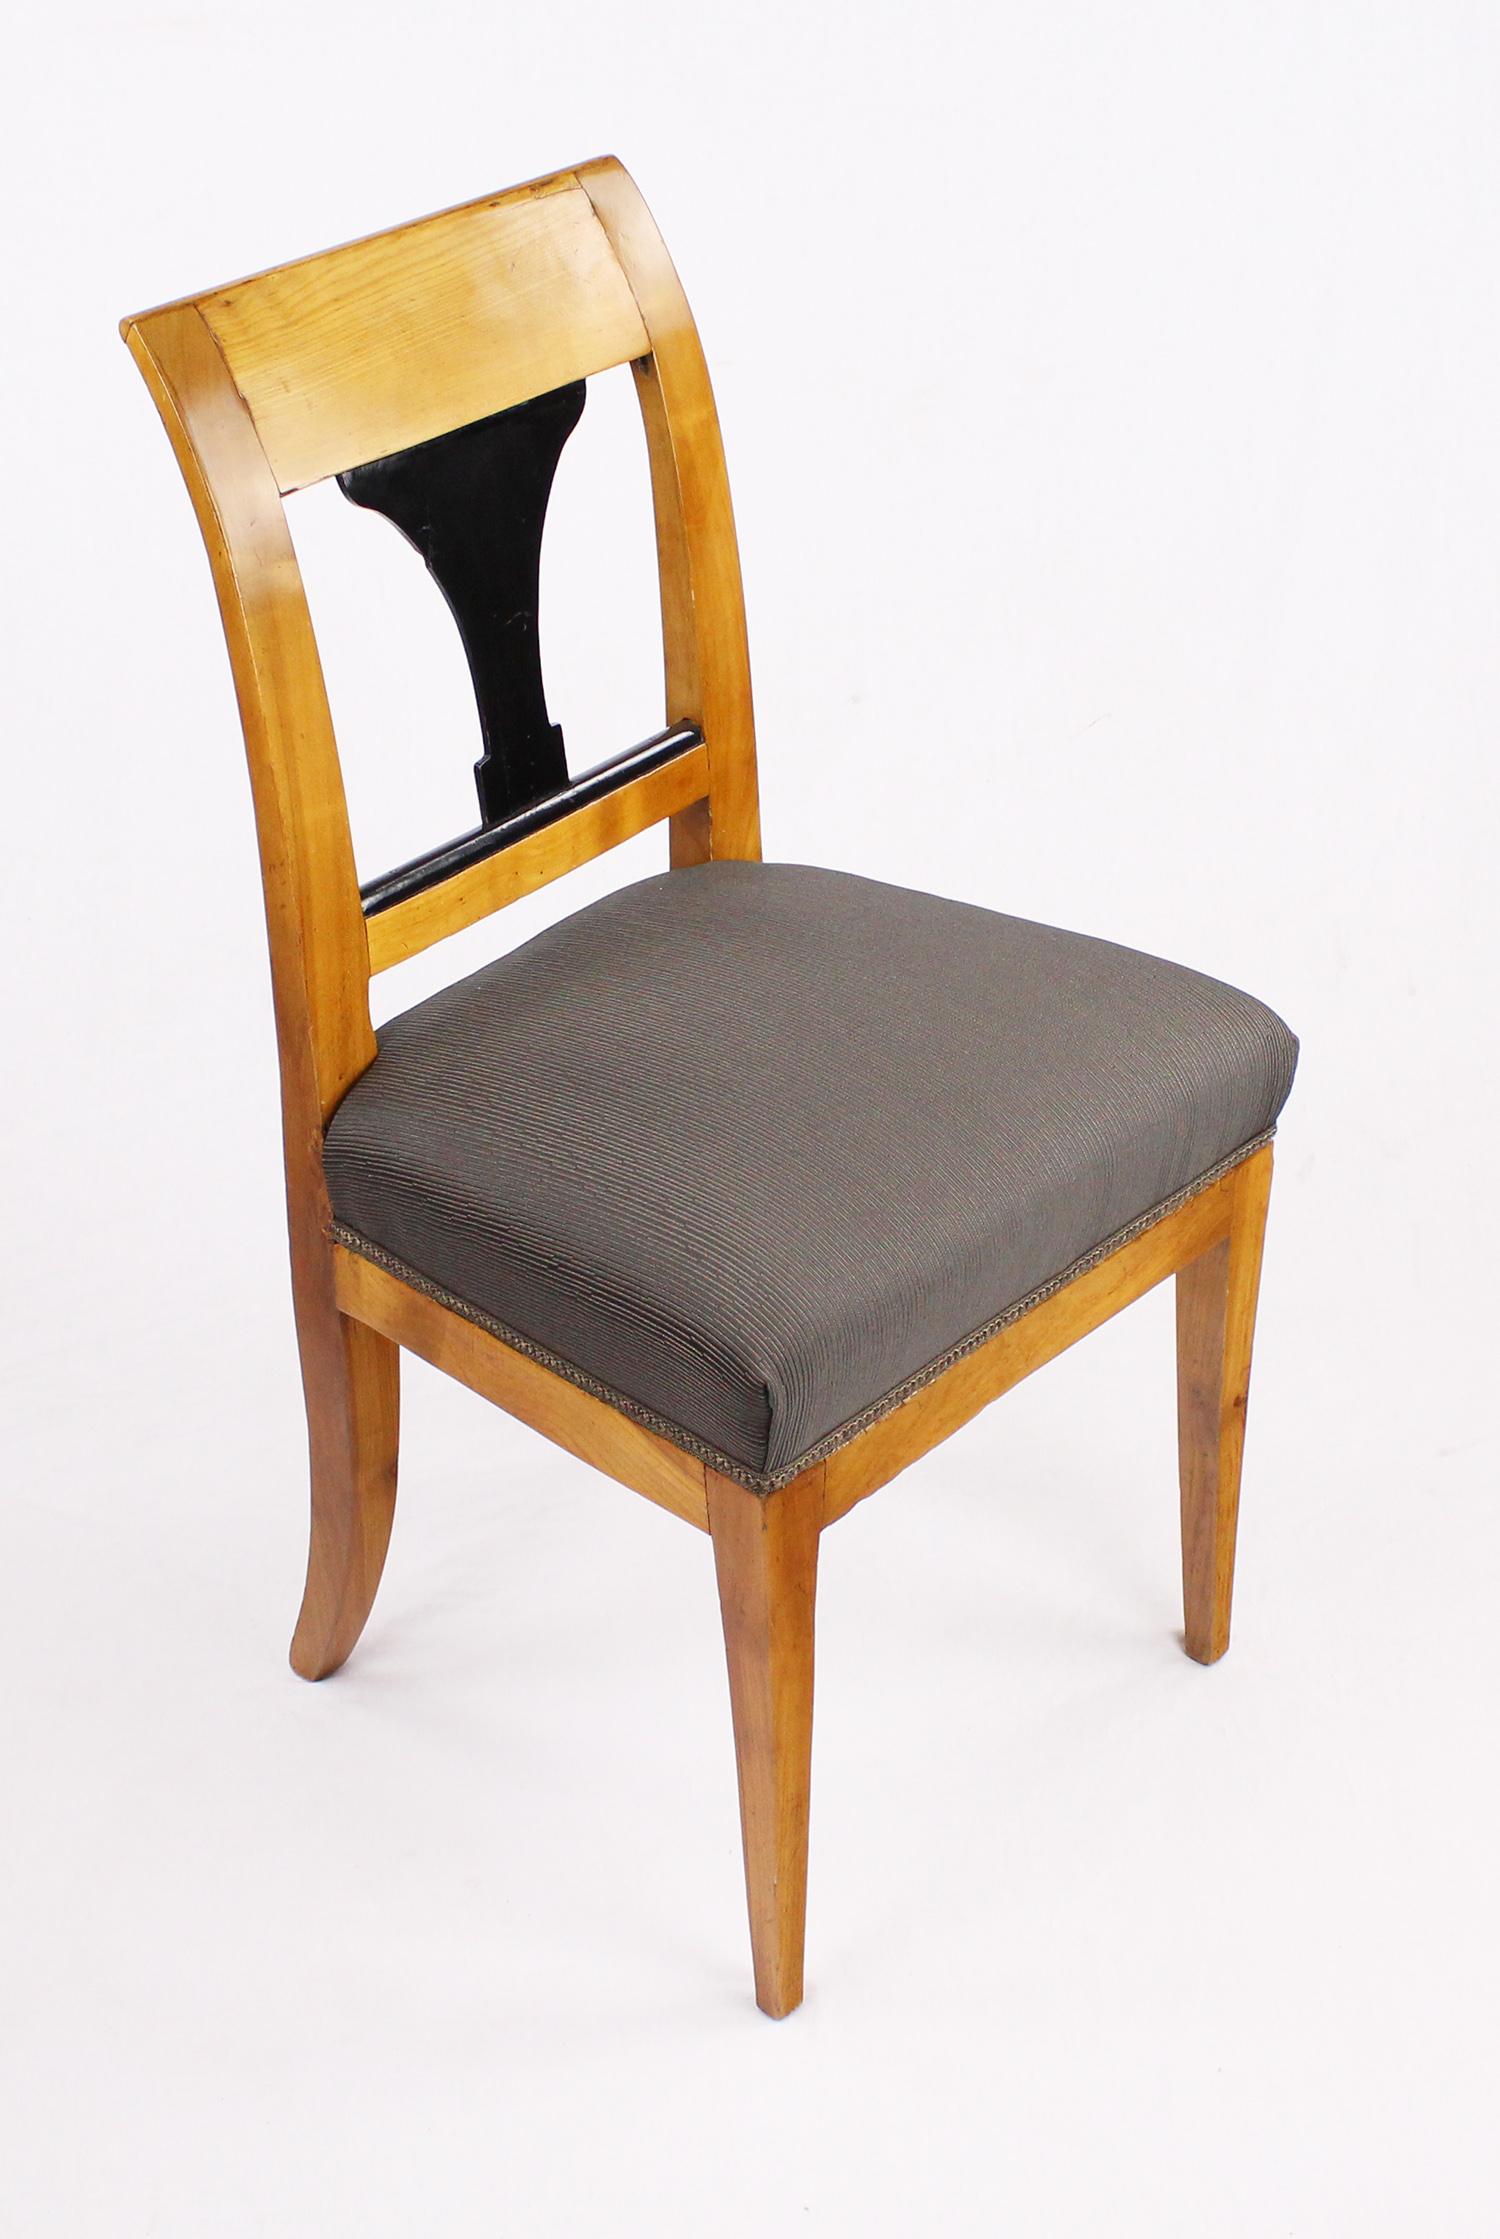 19th Century Biedermeier Period Chair, Cherrywood, circa 1820 In Good Condition For Sale In Muenster, NRW